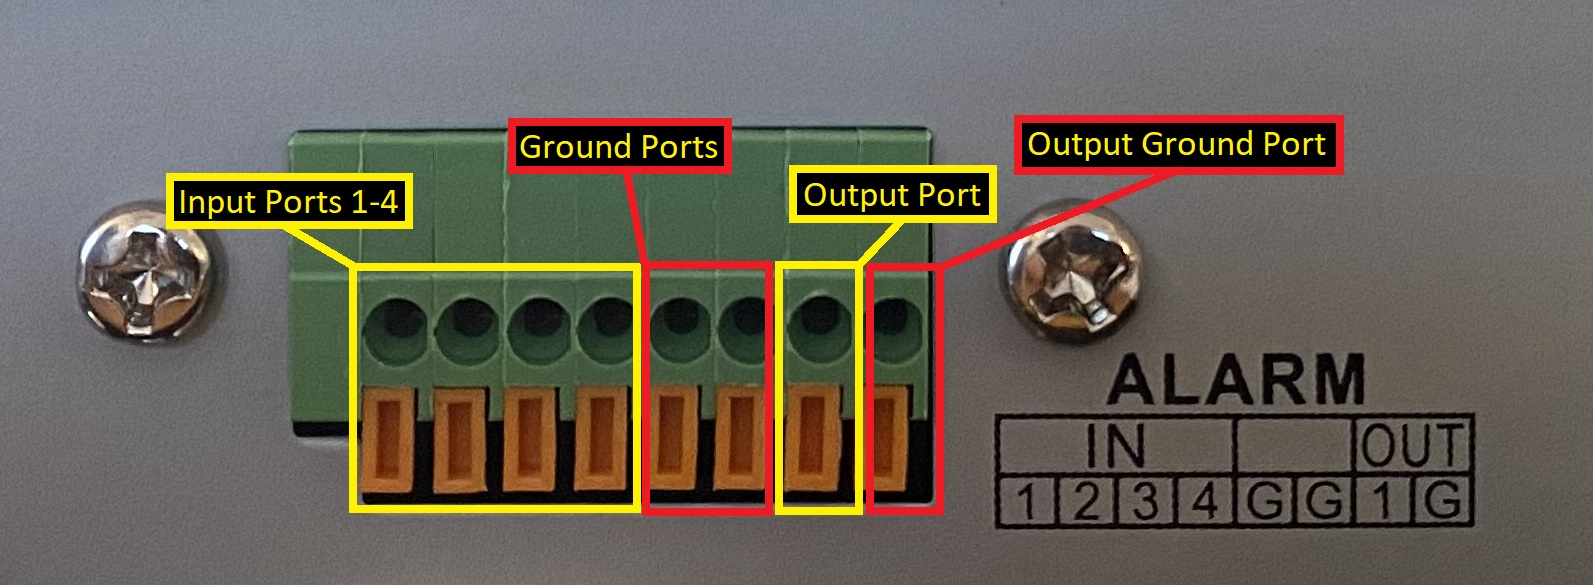 alarm ports.jpg